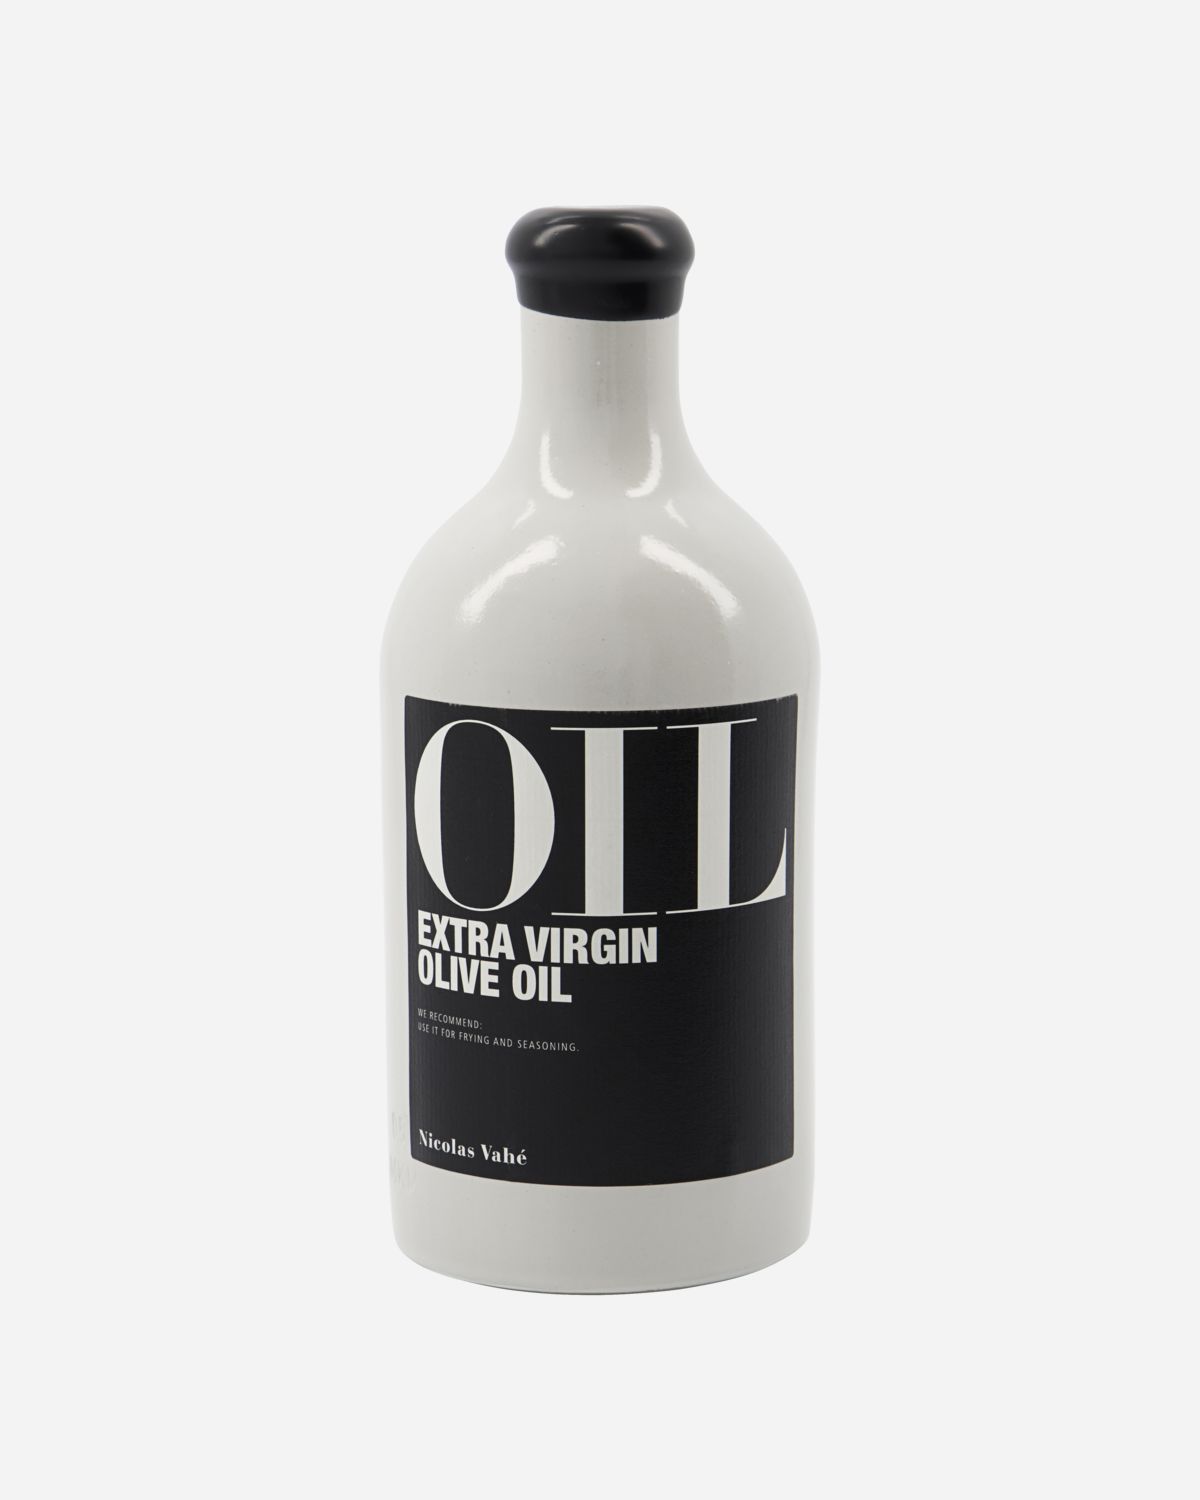 Extra virgin olive oil, 500 ml.